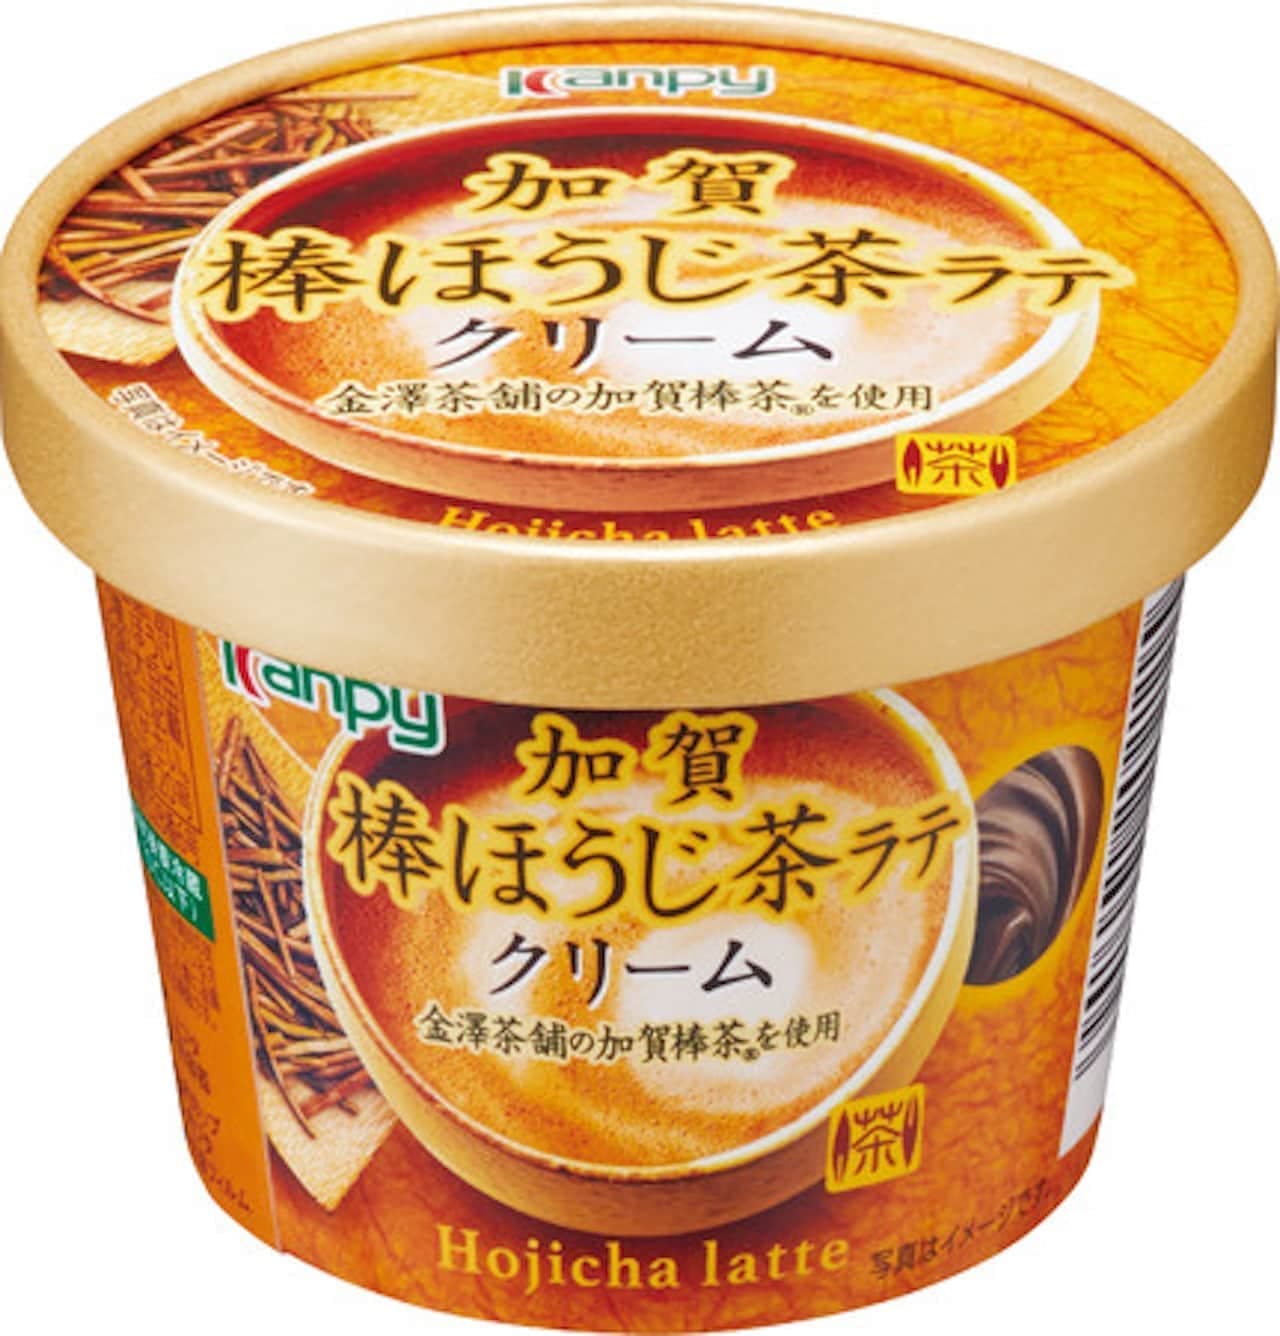 Kato Sangyo "Kampy Kaga Hojicha Latte Cream"